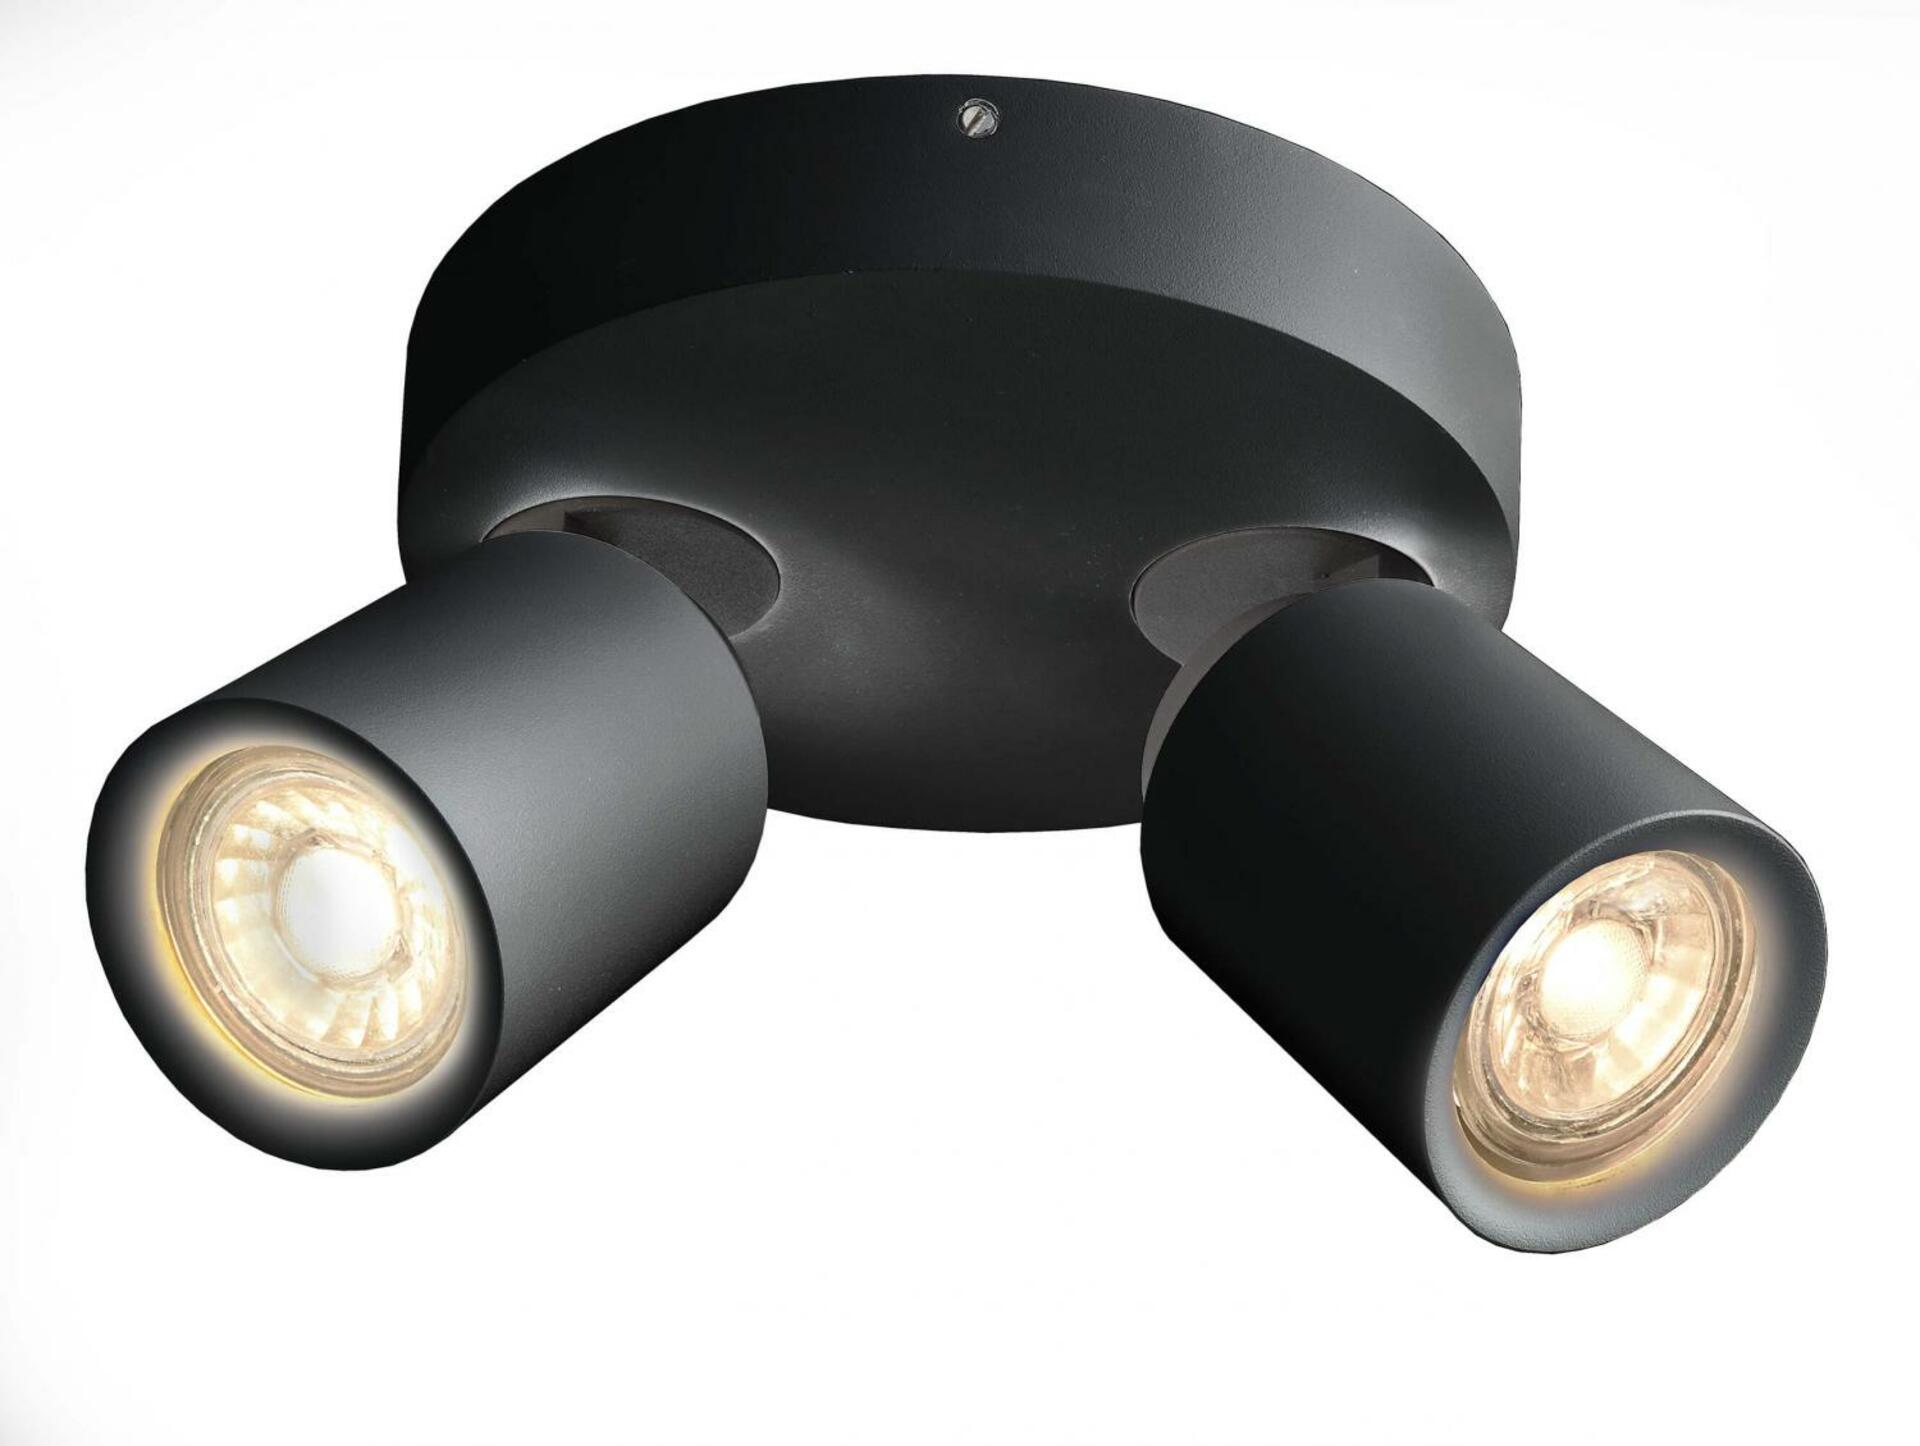 Light Impressions Deko-Light stropní přisazené svítidlo Librae Roa II 220-240V AC/50-60Hz GU10 2x max. 50,00 W tmavě černá RAL 9005 348173